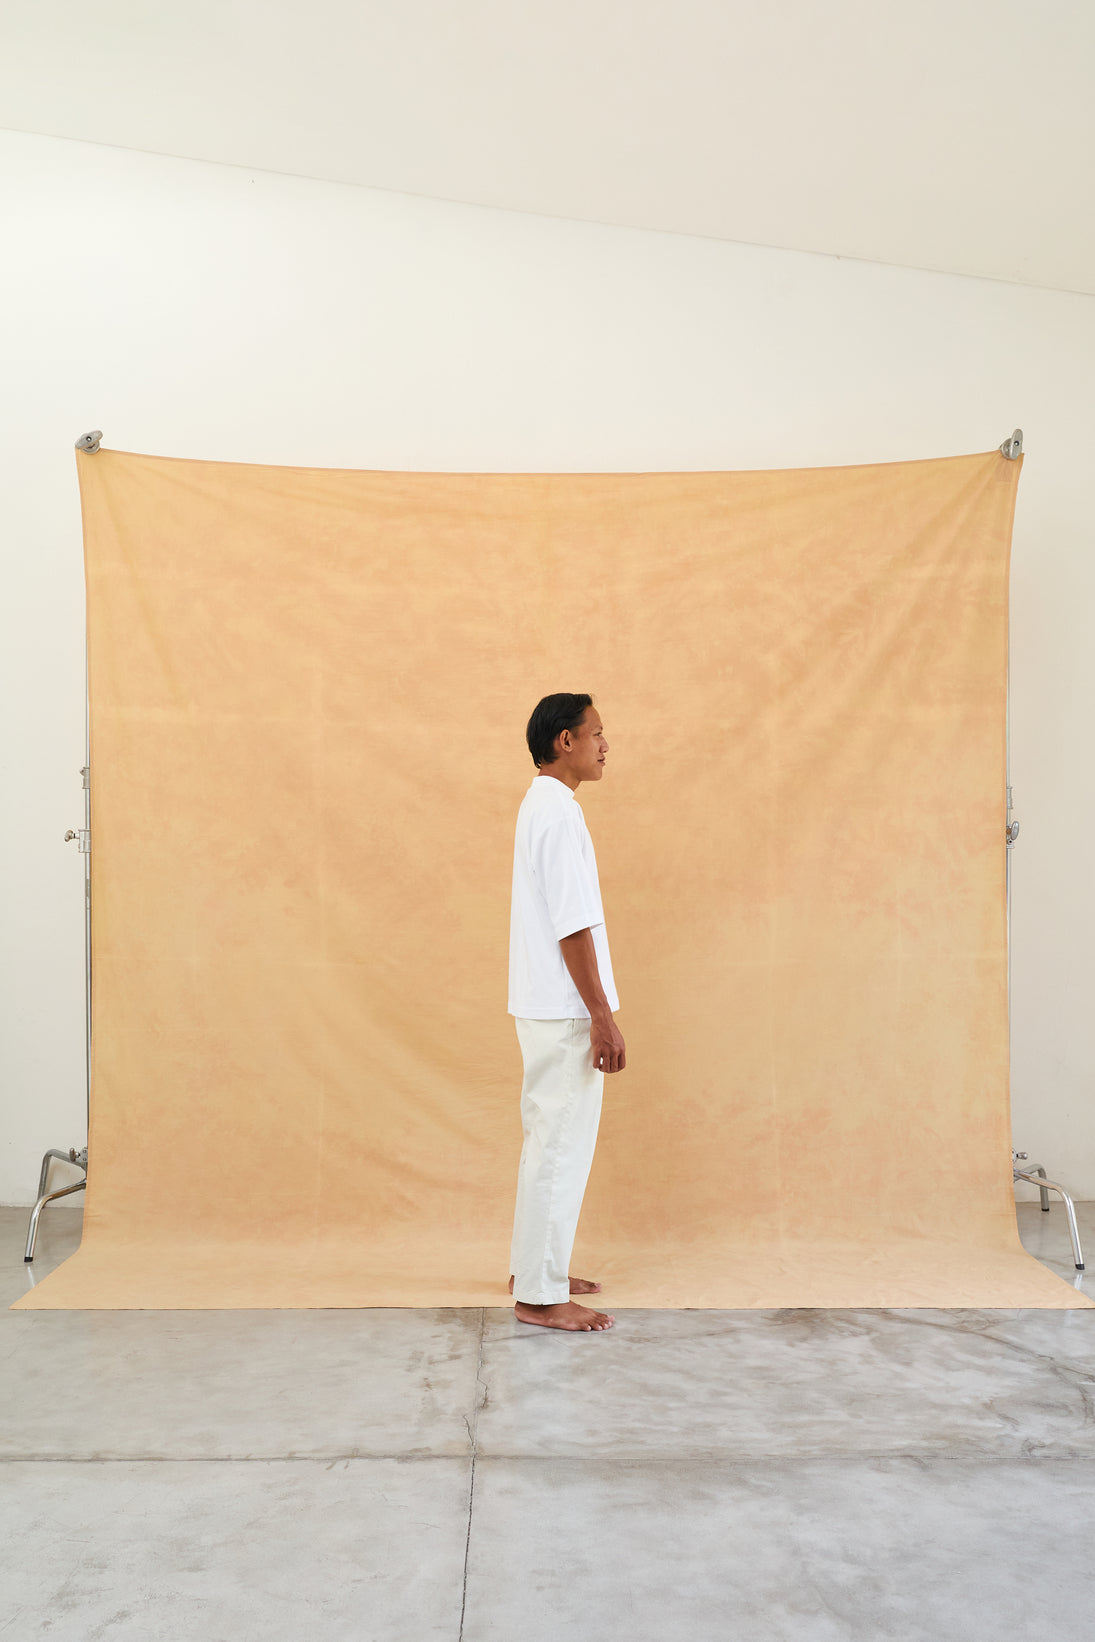 [3x3m] Tie Dyed Cotton Backdrop Cinnamon